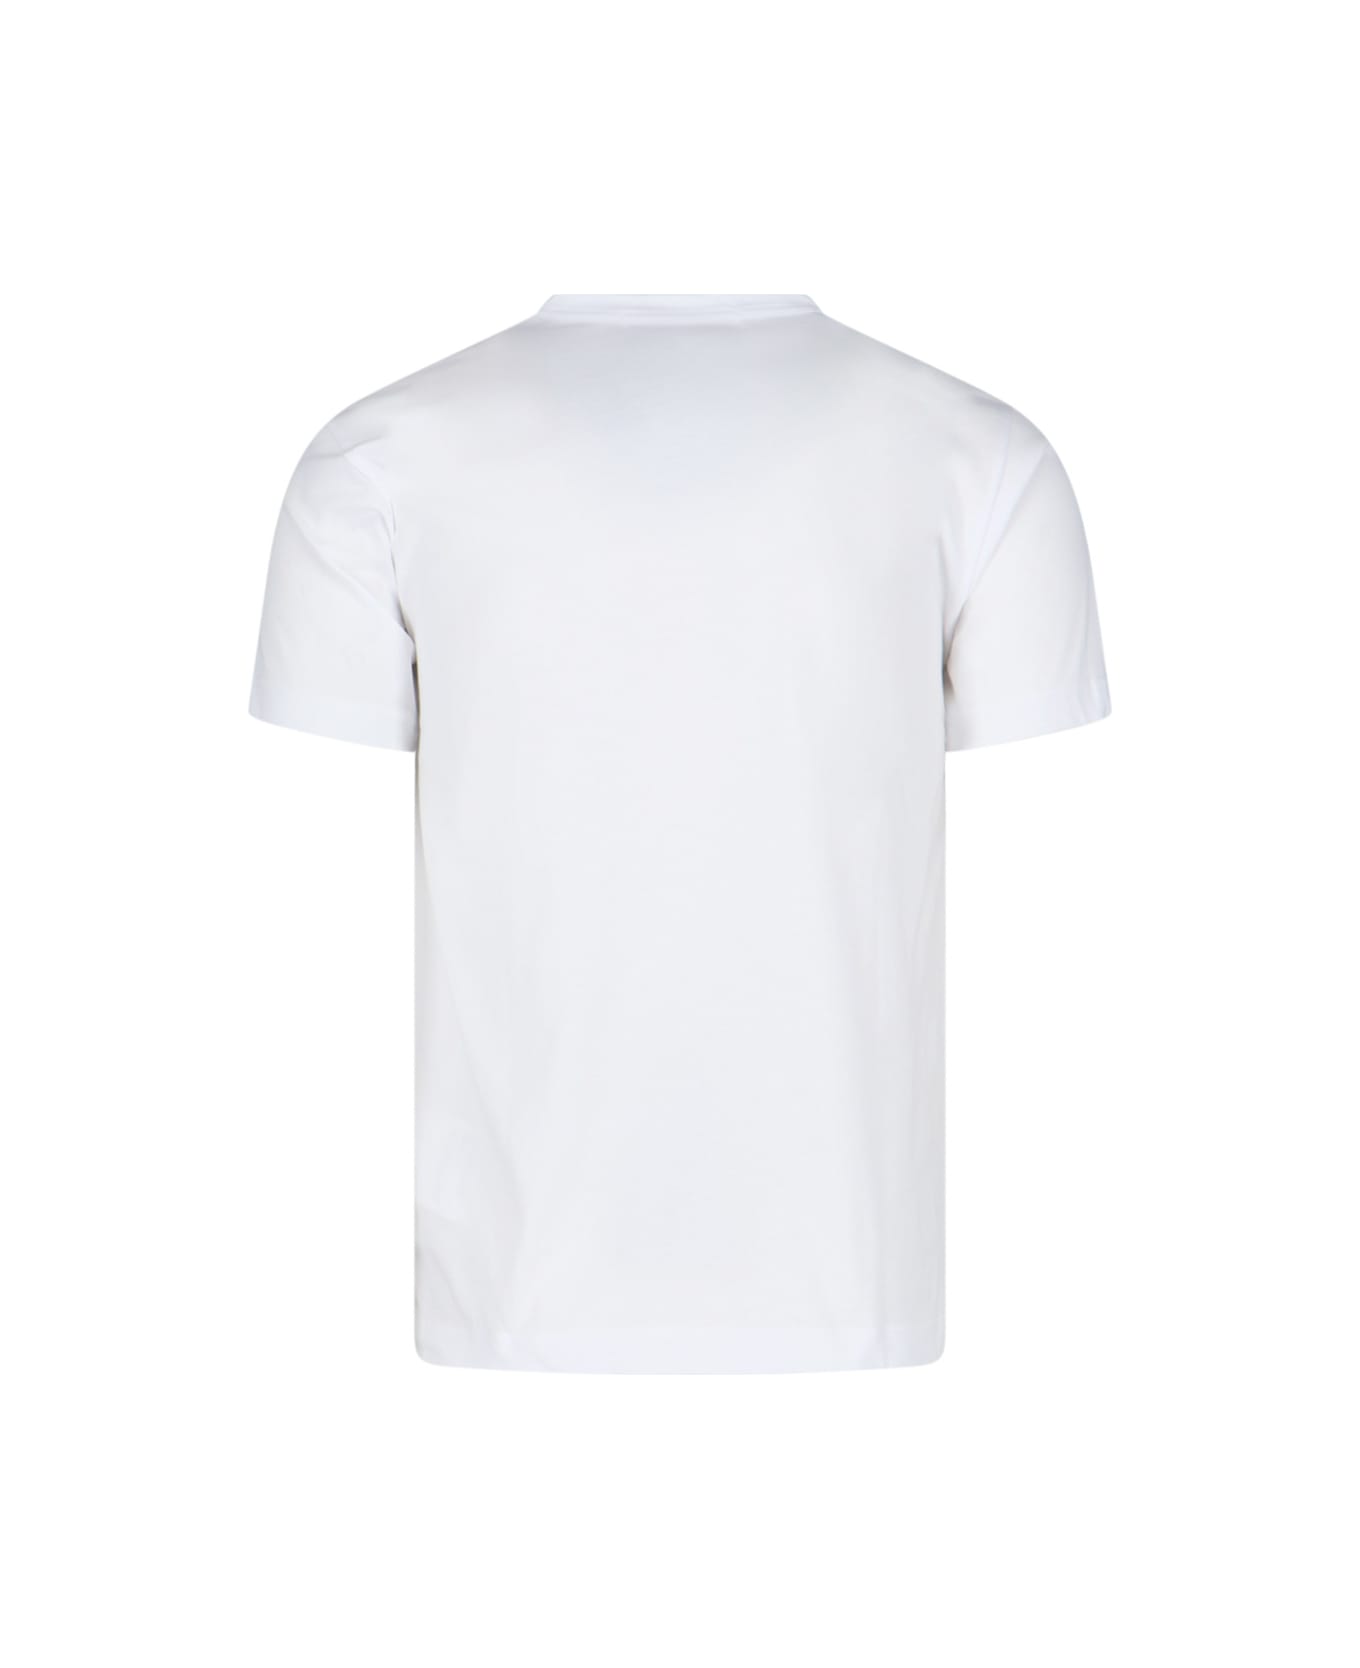 Comme des Garçons Shirt Printed T-shirt - 2 WHITE